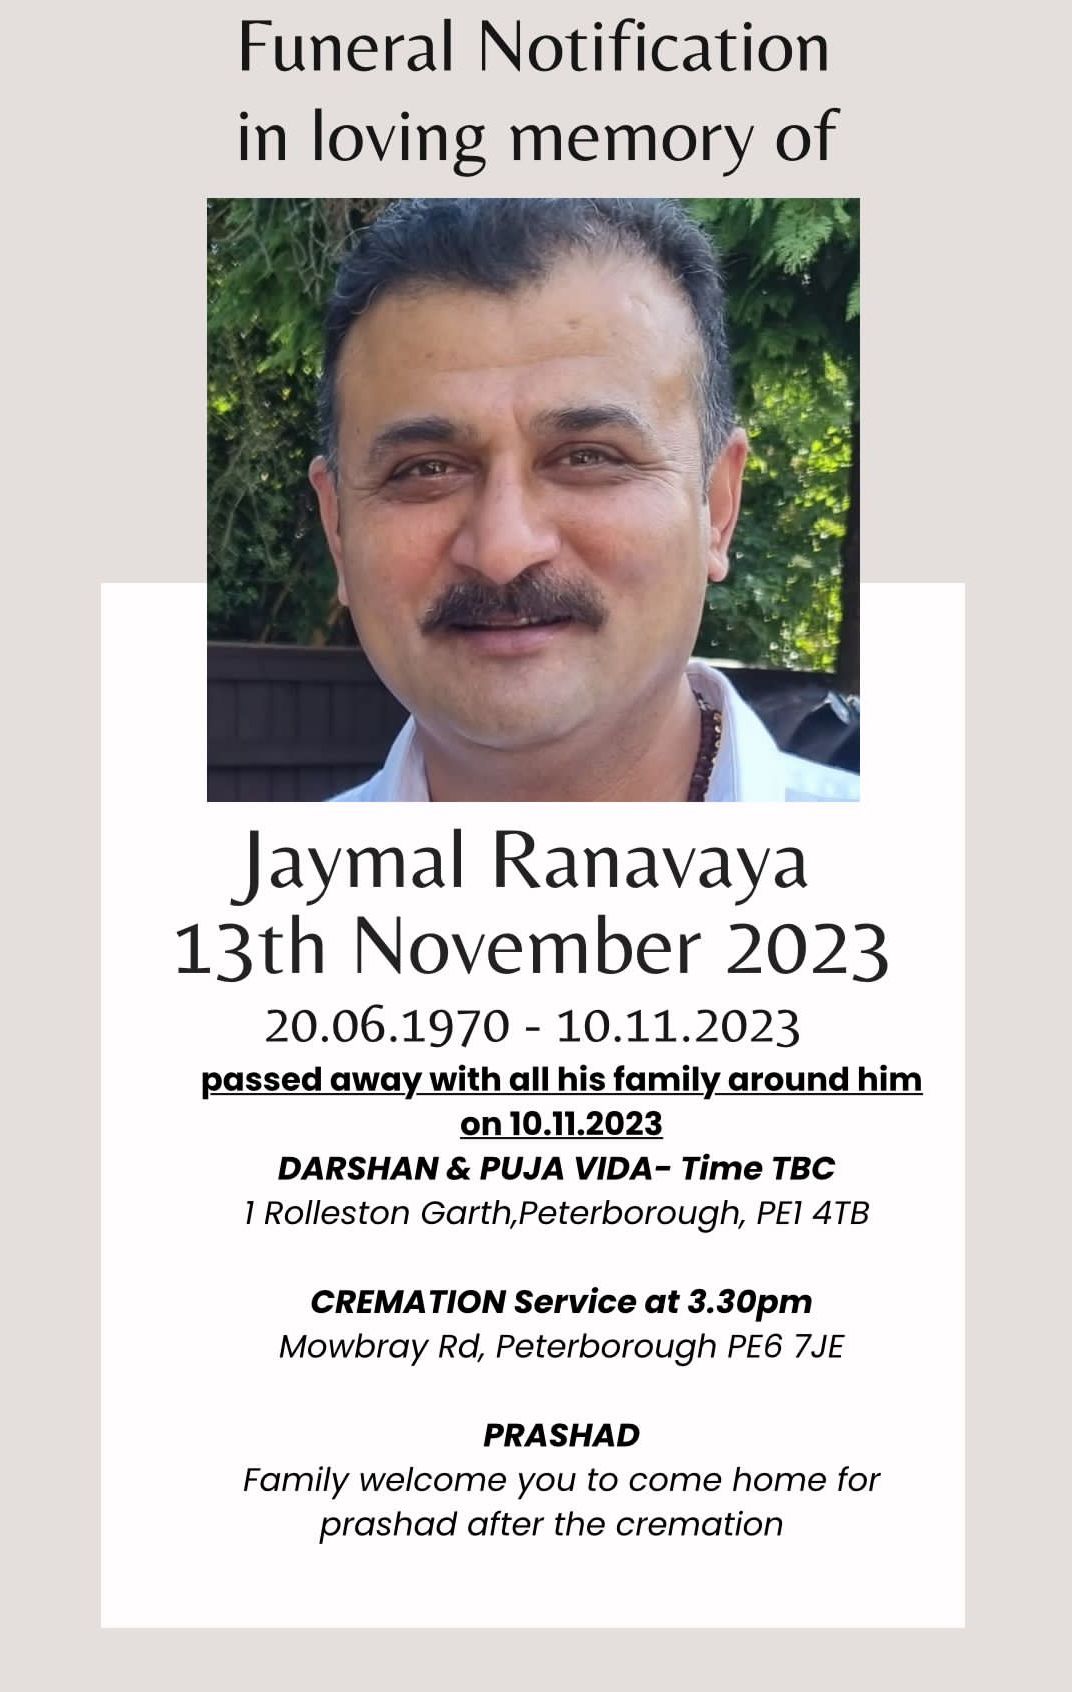 Jaymal Ranavaya passed away